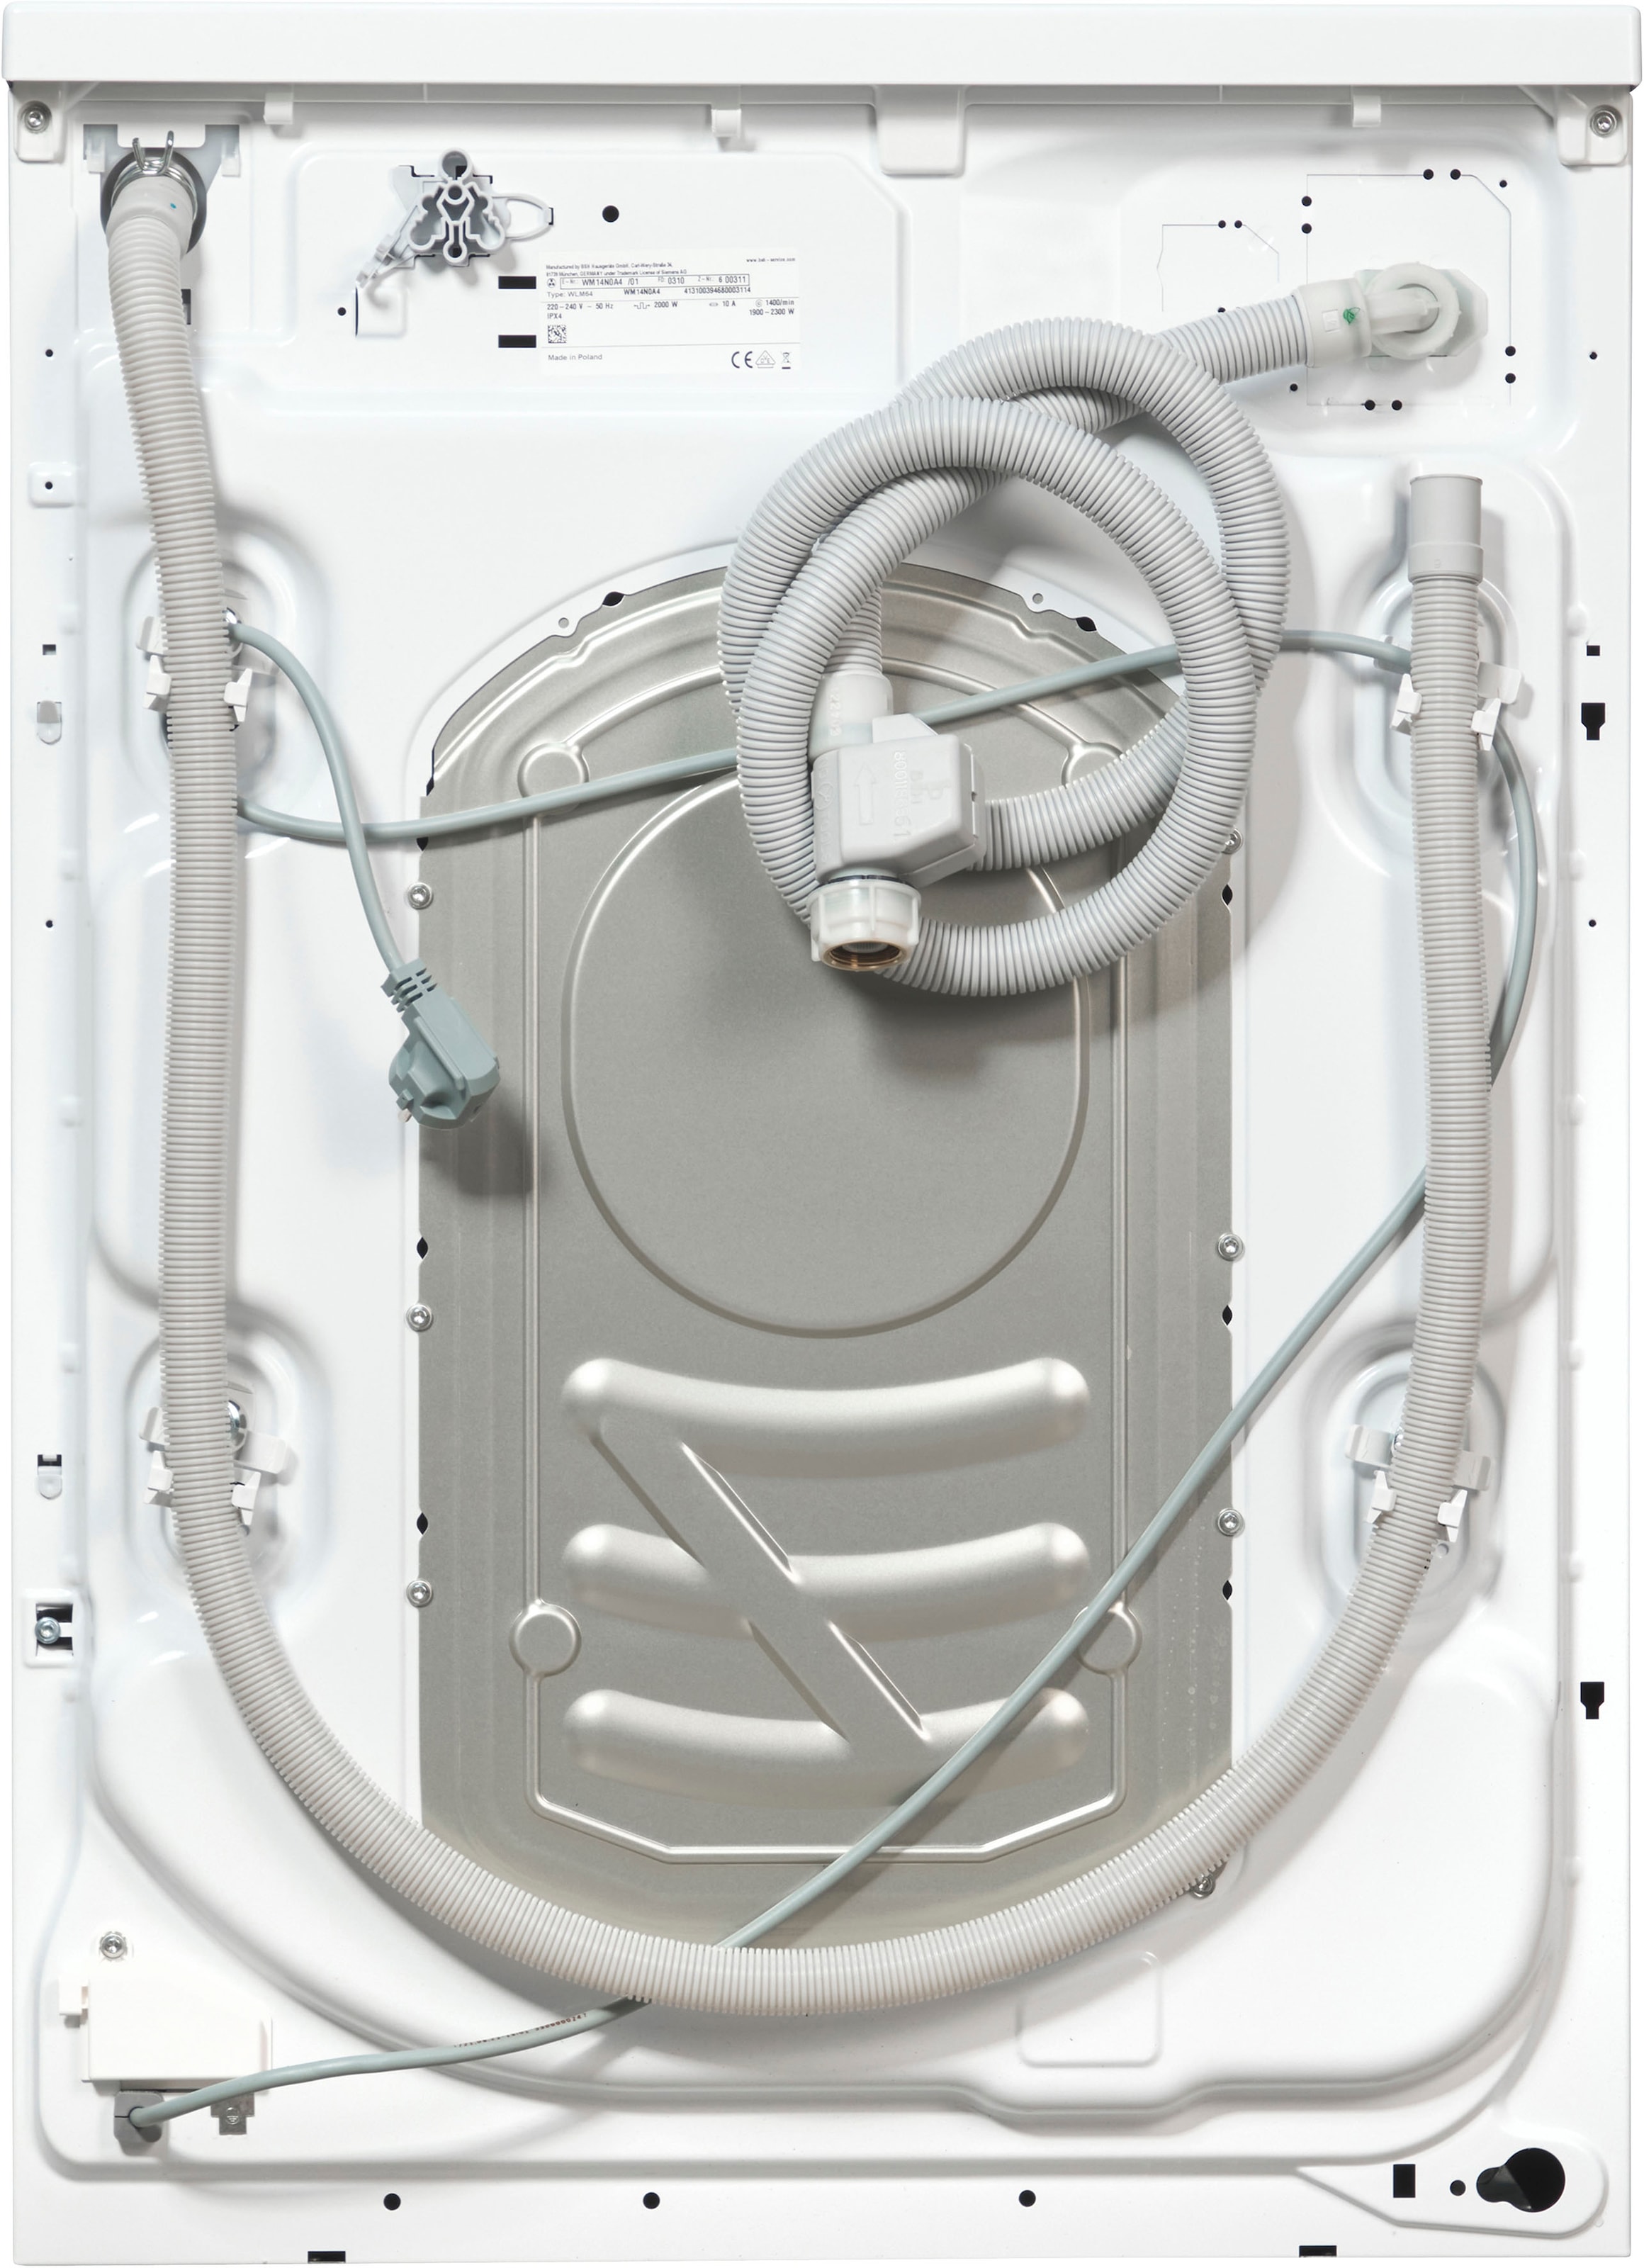 SIEMENS Waschmaschine »WM14N0A4«, iQ300, WM14N0A4, 8 kg, 1400 U/min, smartFinish – glättet dank Dampf